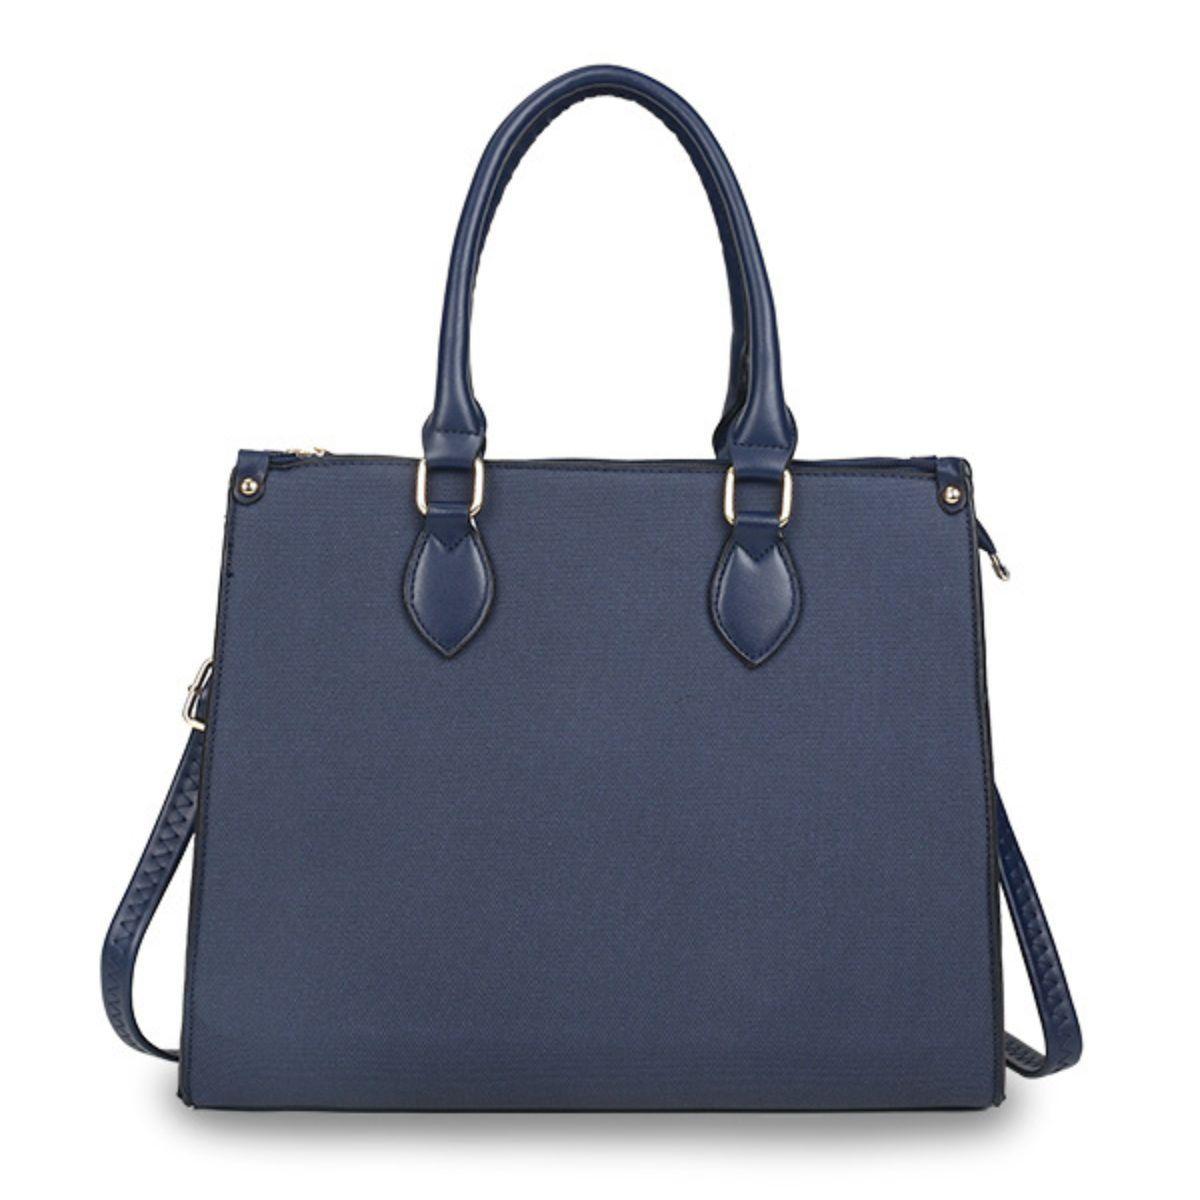 Get Noticed with Stylish Blue Granule Satchel Handbag for Women